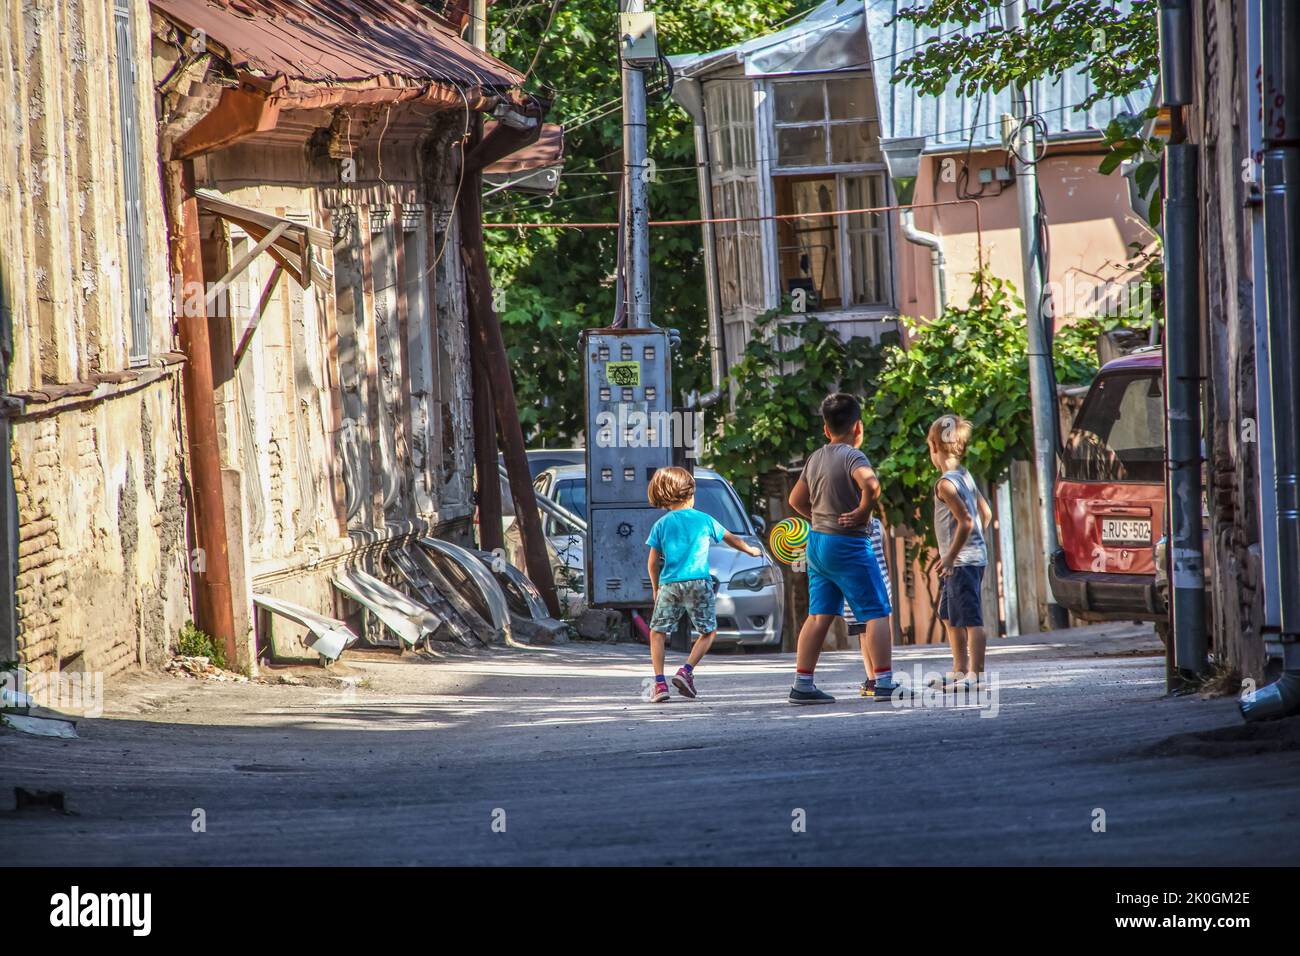 07 16 2019 Tbilisi Georgia - Un grupo de niños juegan a la pelota en un callejón en el casco antiguo de Tbilisi rodeado de edificios desenfrenados Foto de stock